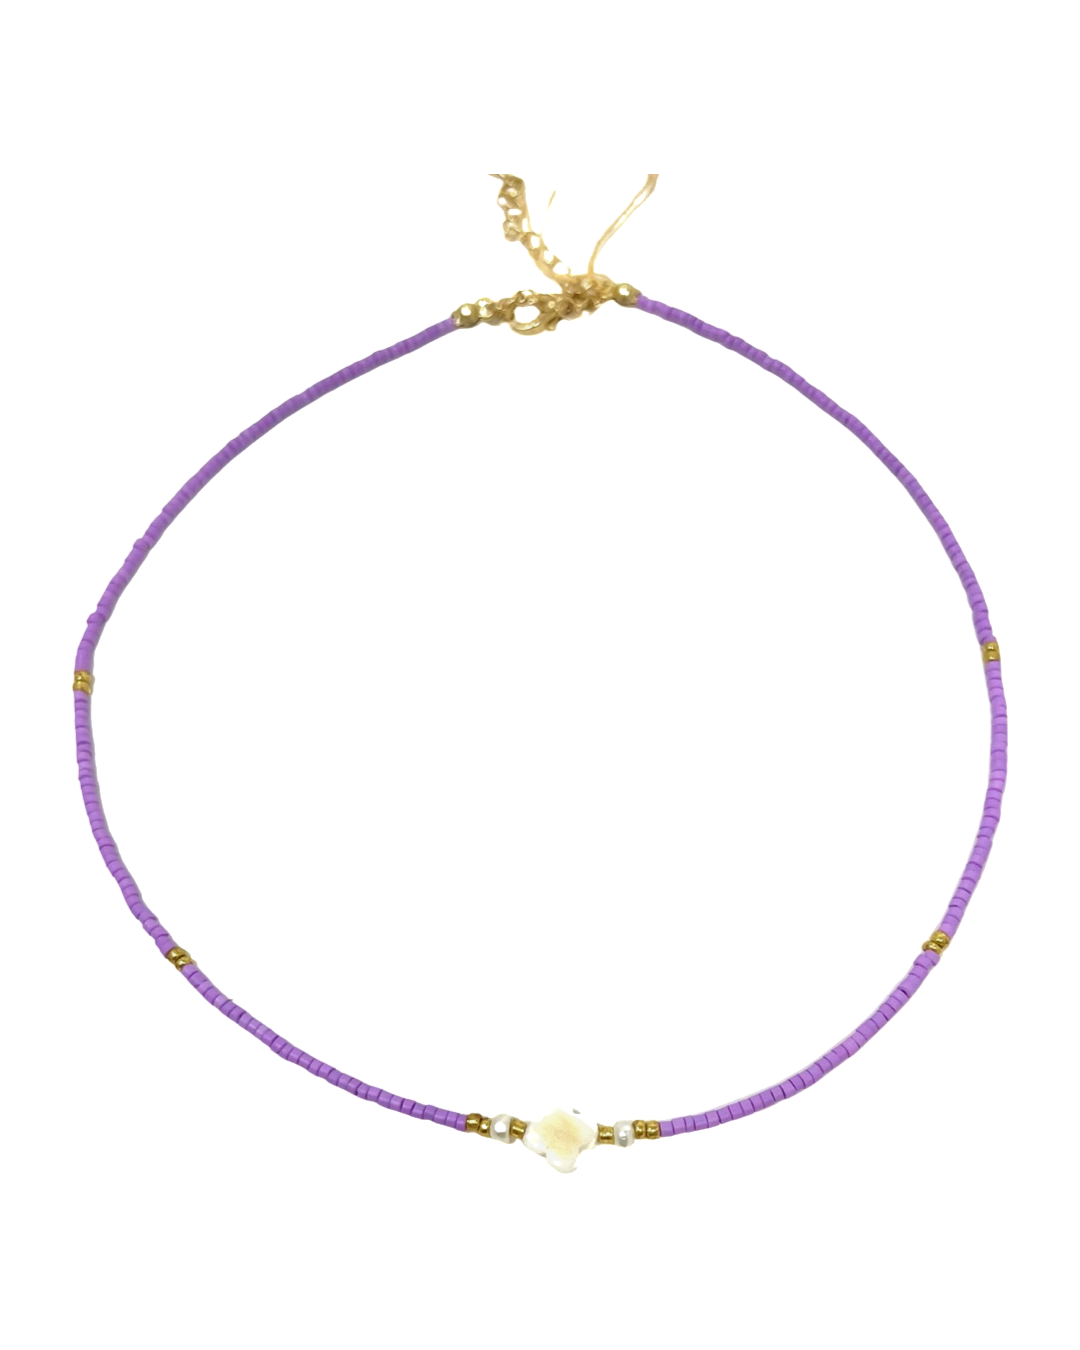 Baby Clover Summer Necklace in Lavender